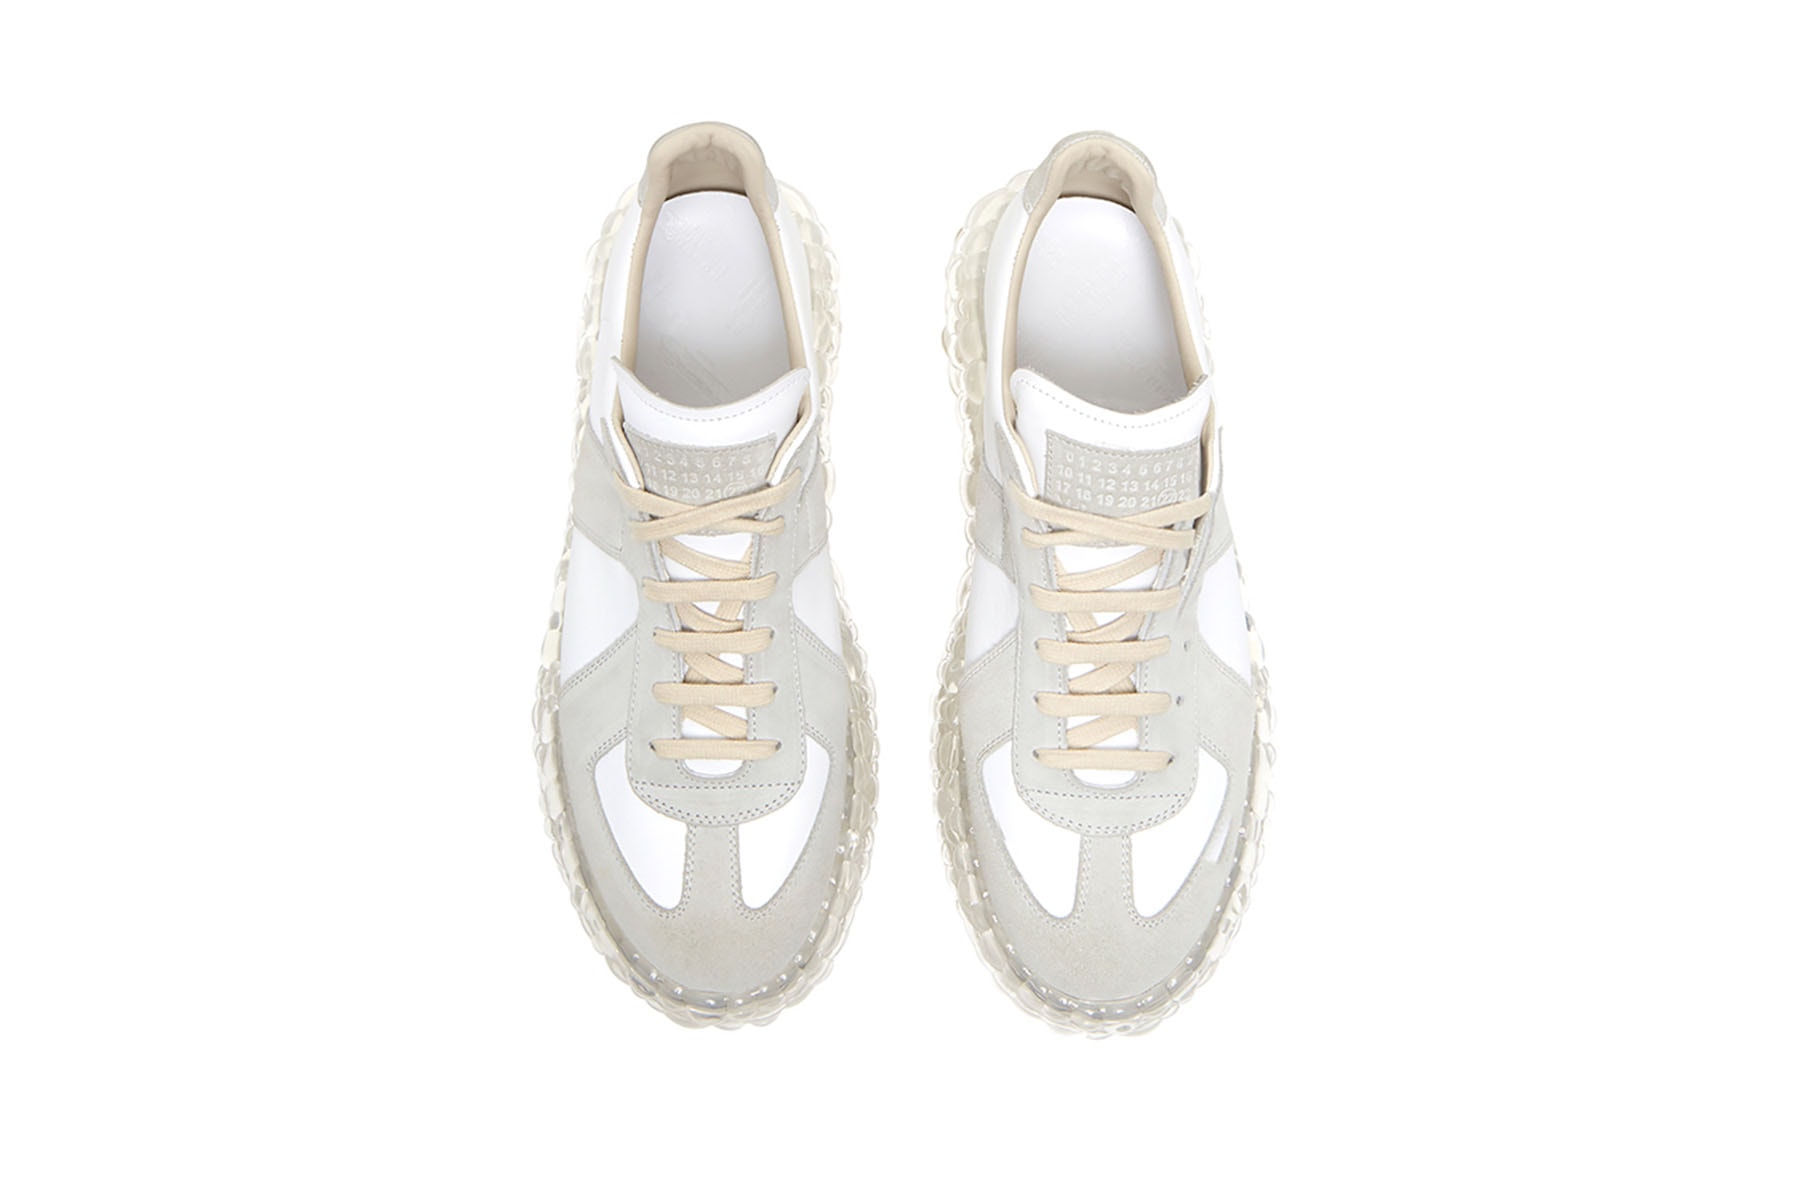 Maison Margiela からエアソールを装着したジャーマントレーナーが登場 Maison Margiela Replica Super Bounce Sneakers "Grey" First Look Closer Spring Summer 2020 SS20 LN-CC Pre-Order High End Luxury Footwear Runway